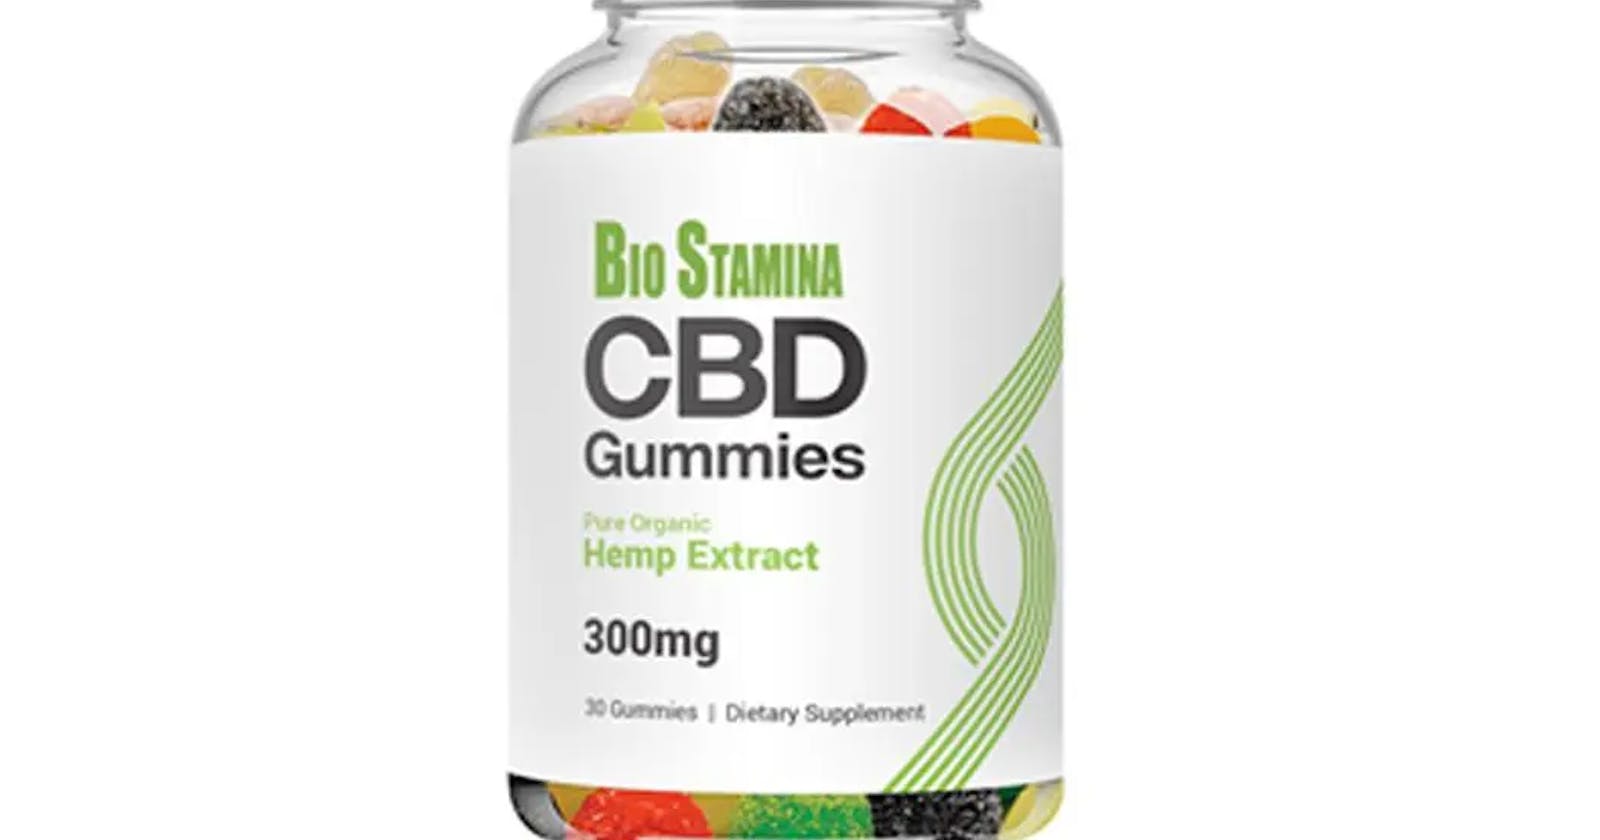 Bio Stamina CBD Gummies Reviews